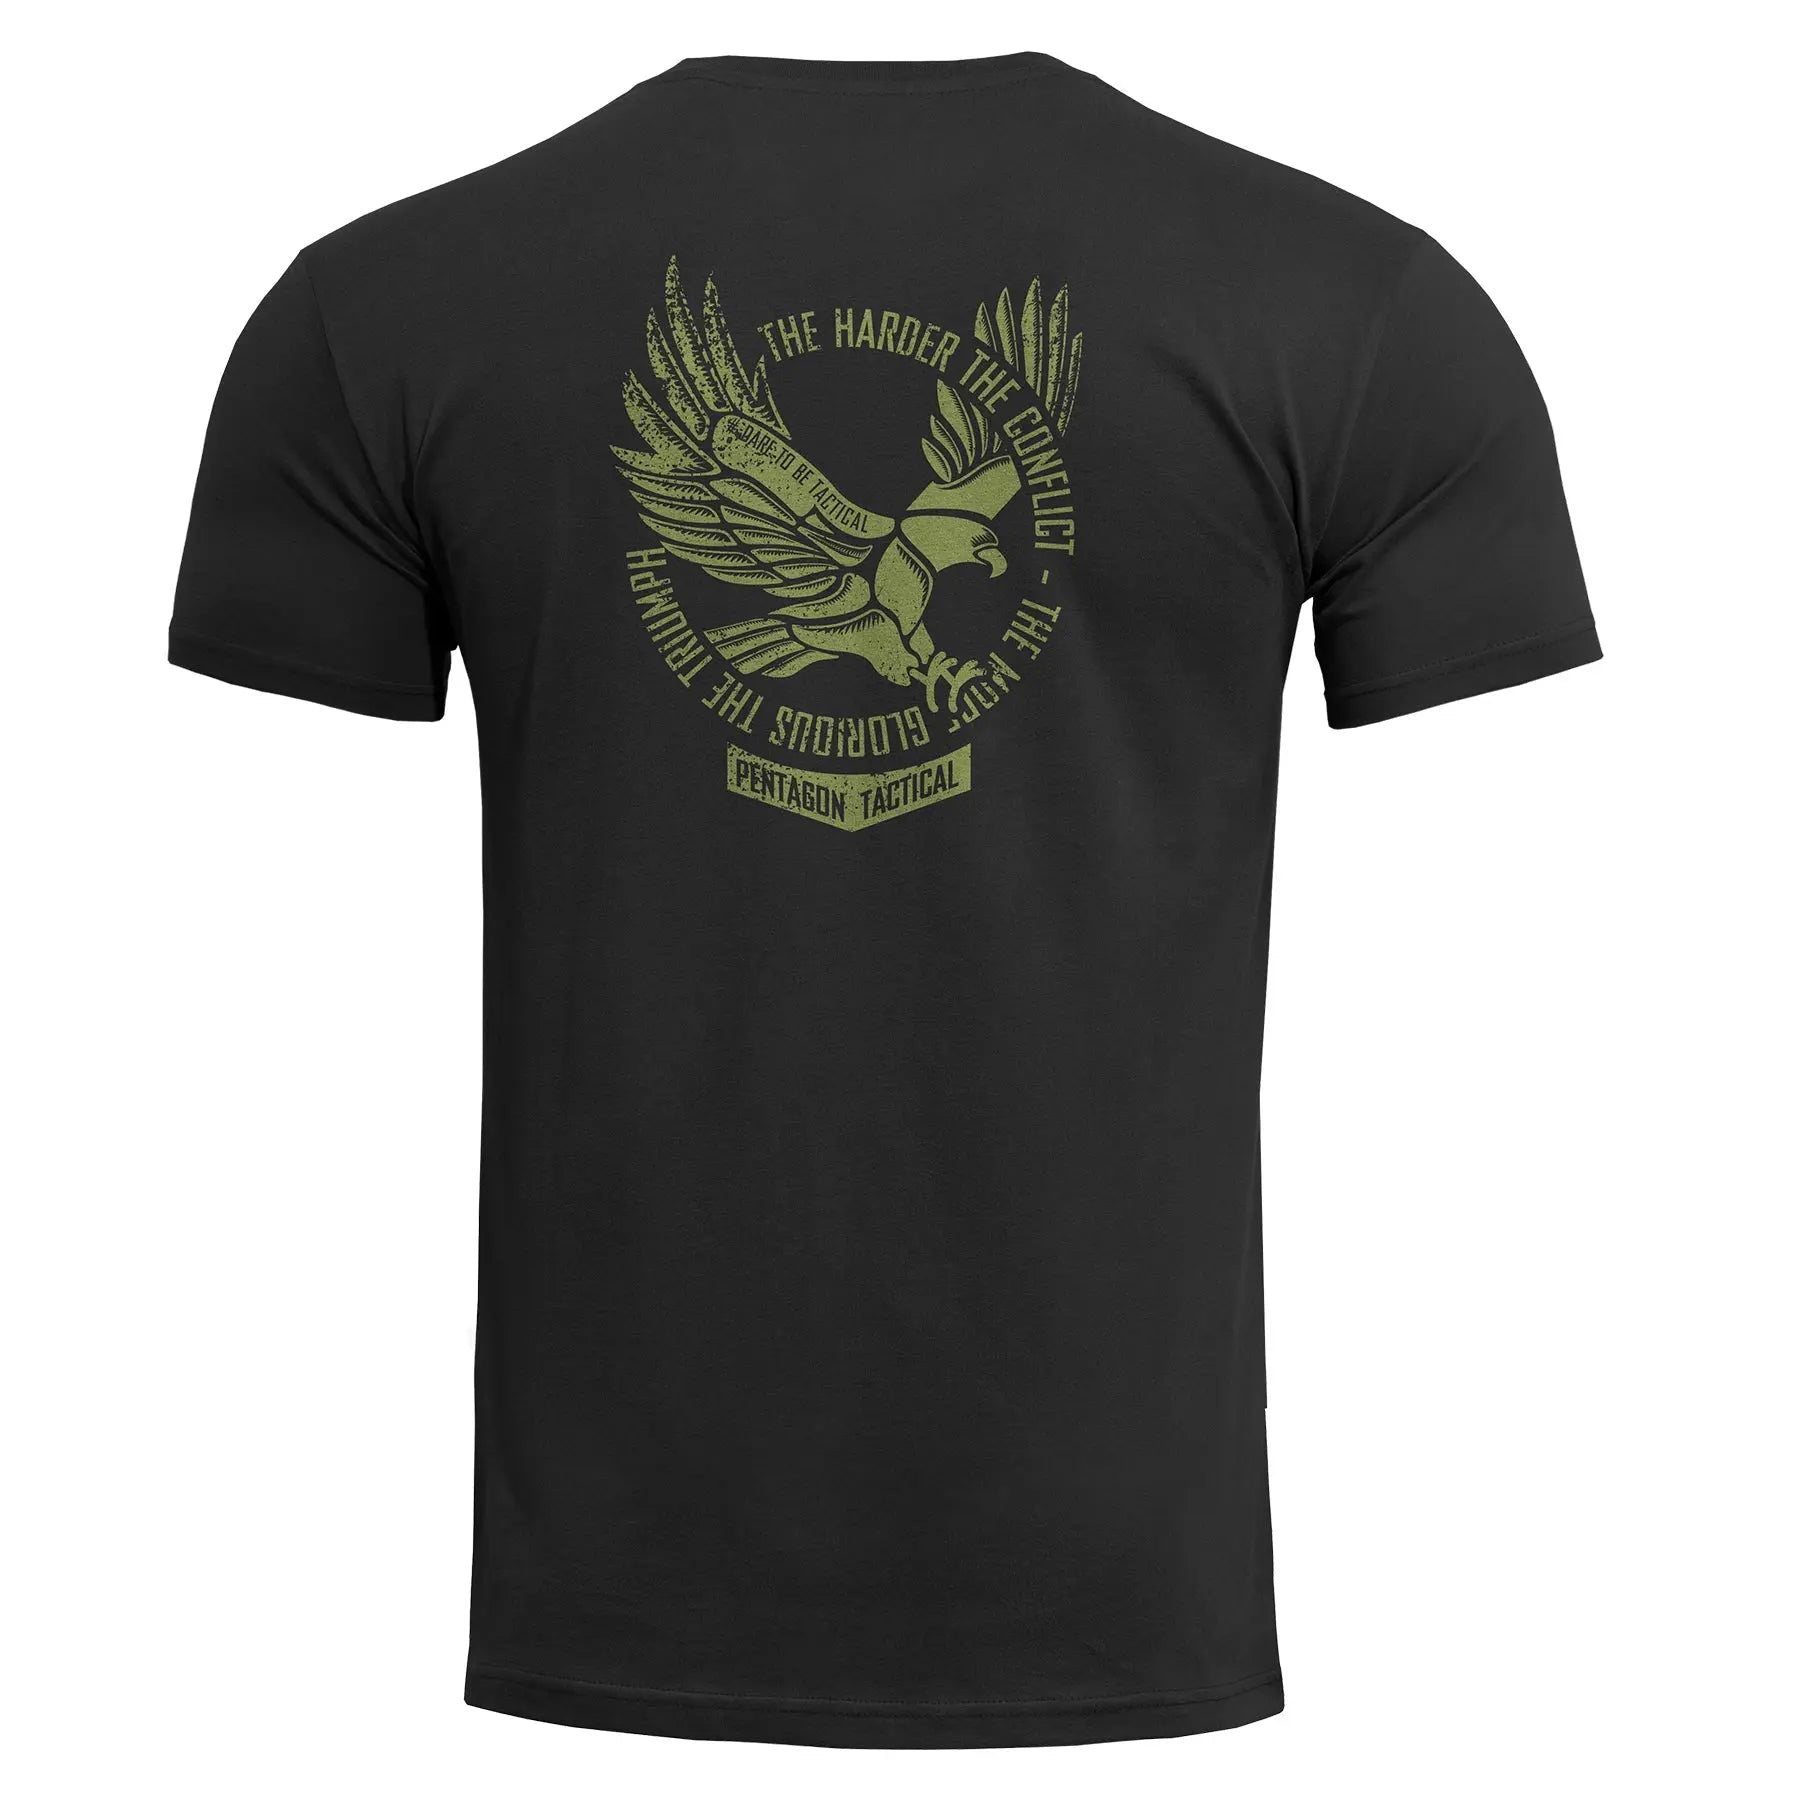 Ageron "Eagle" T-Shirt NSO Gear T-shirt